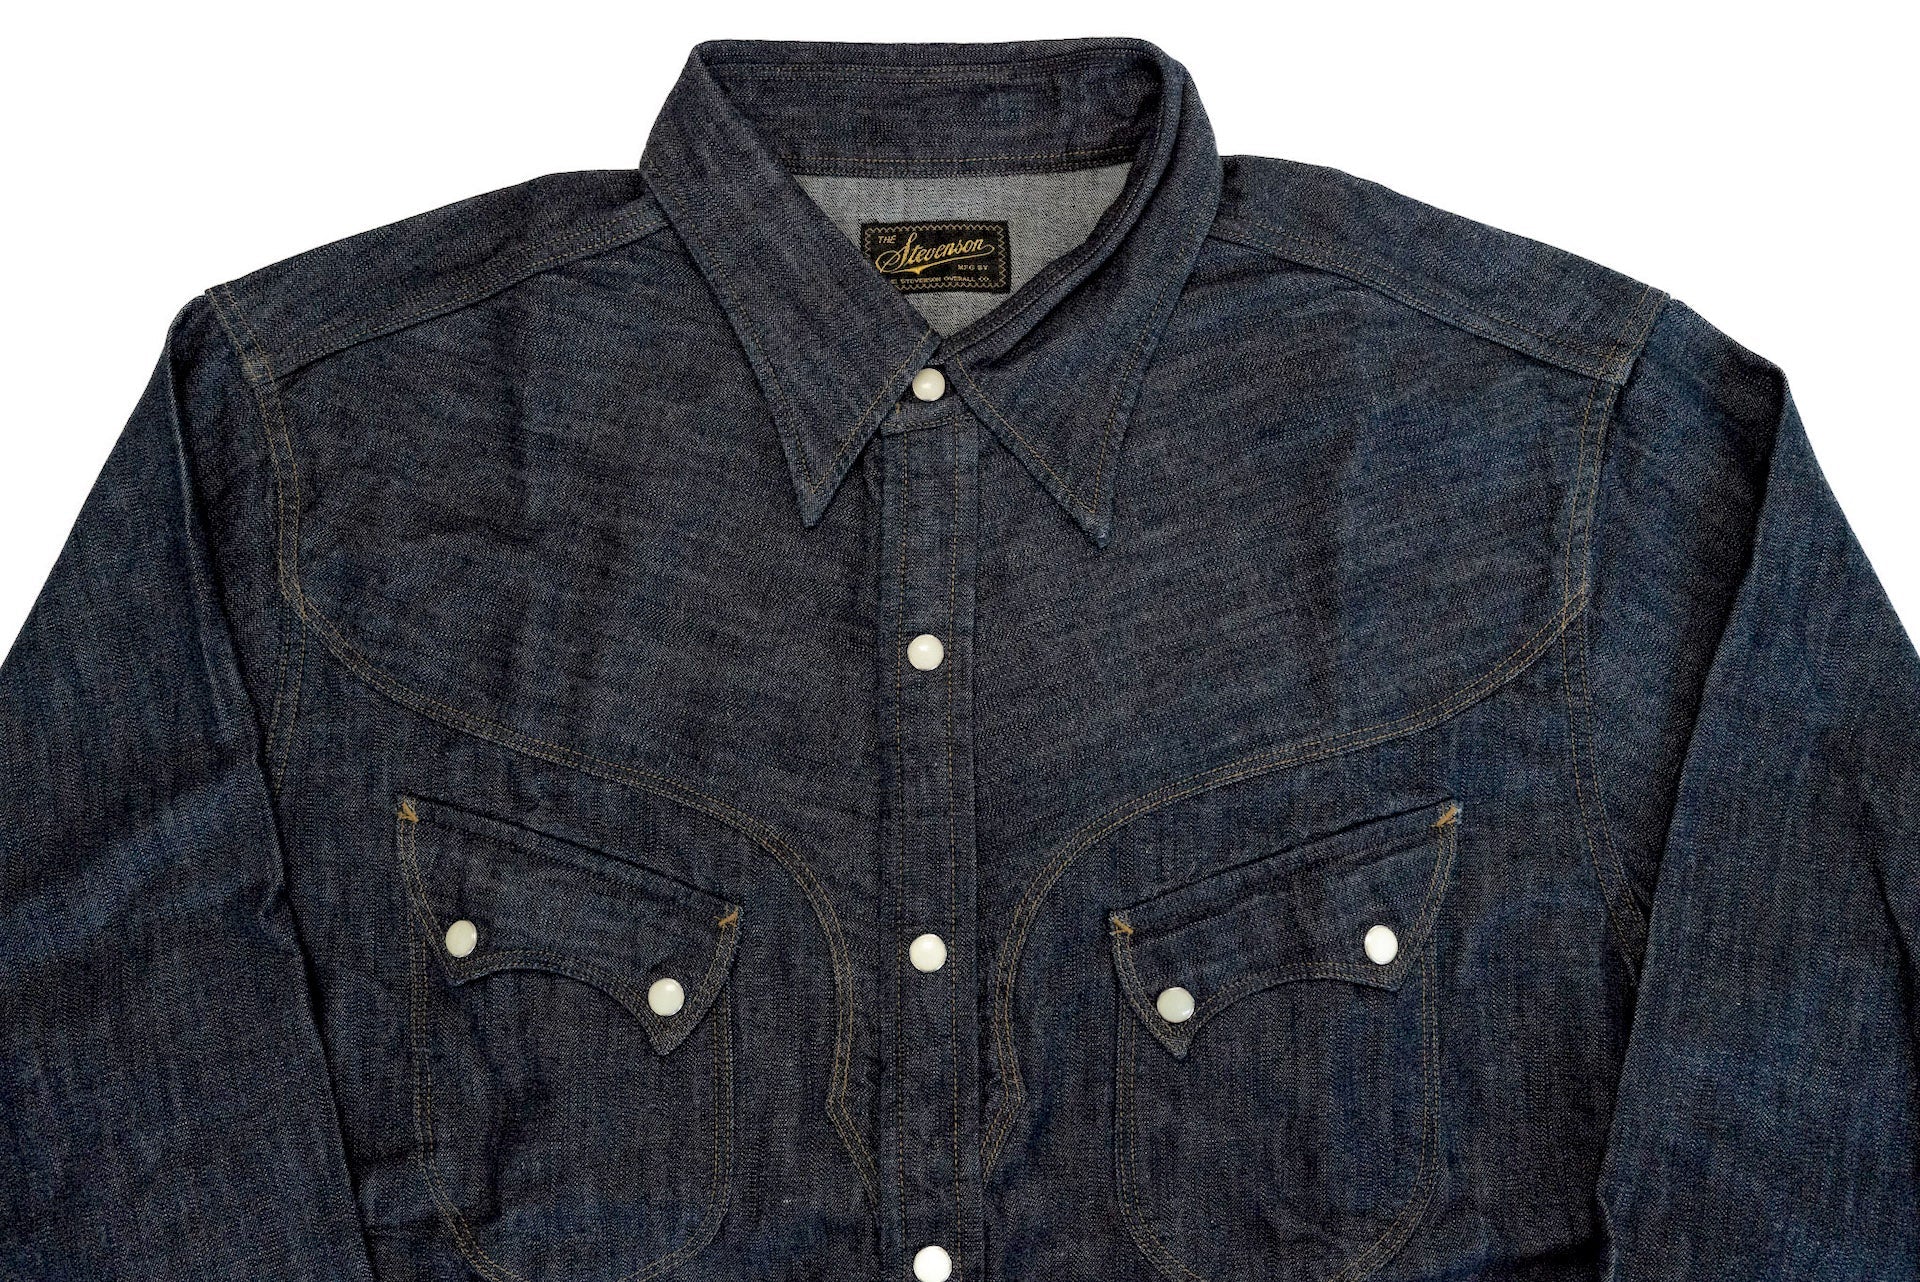 Stevenson Overall Co. 'Cody' 6.5oz Denim Western Shirt (Indigo)